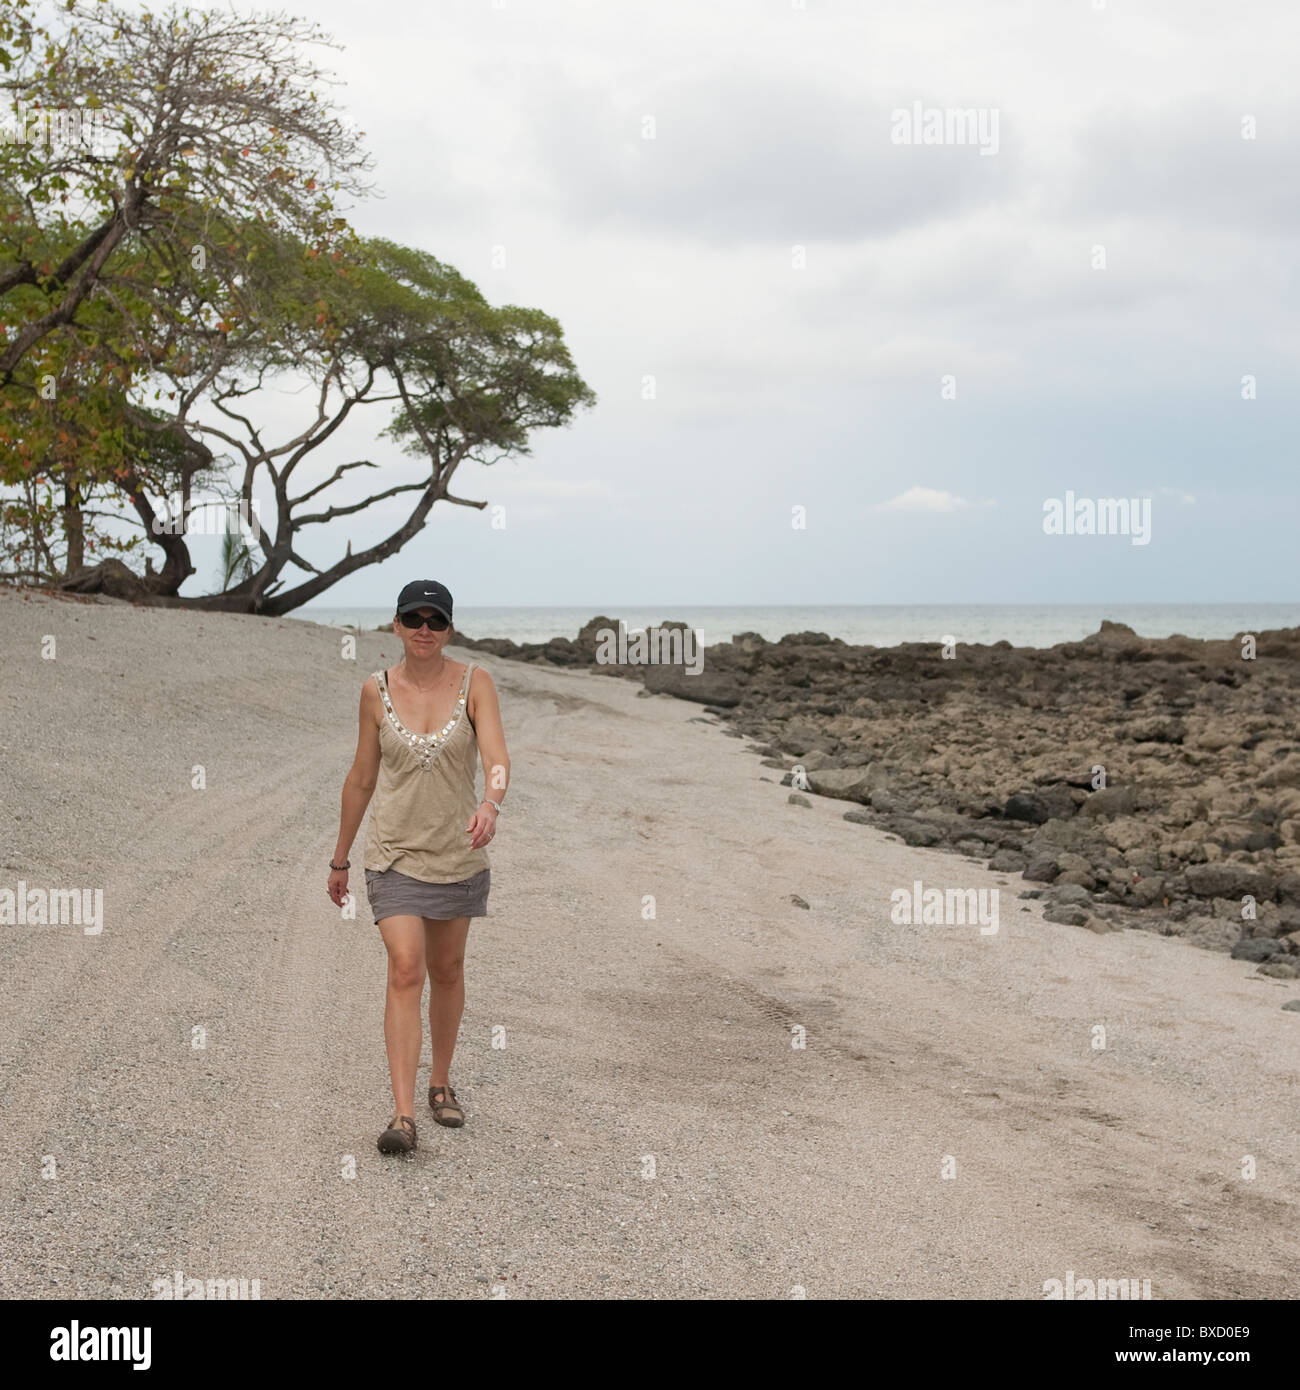 Woman walking along coastal road in Costa Rica Stock Photo